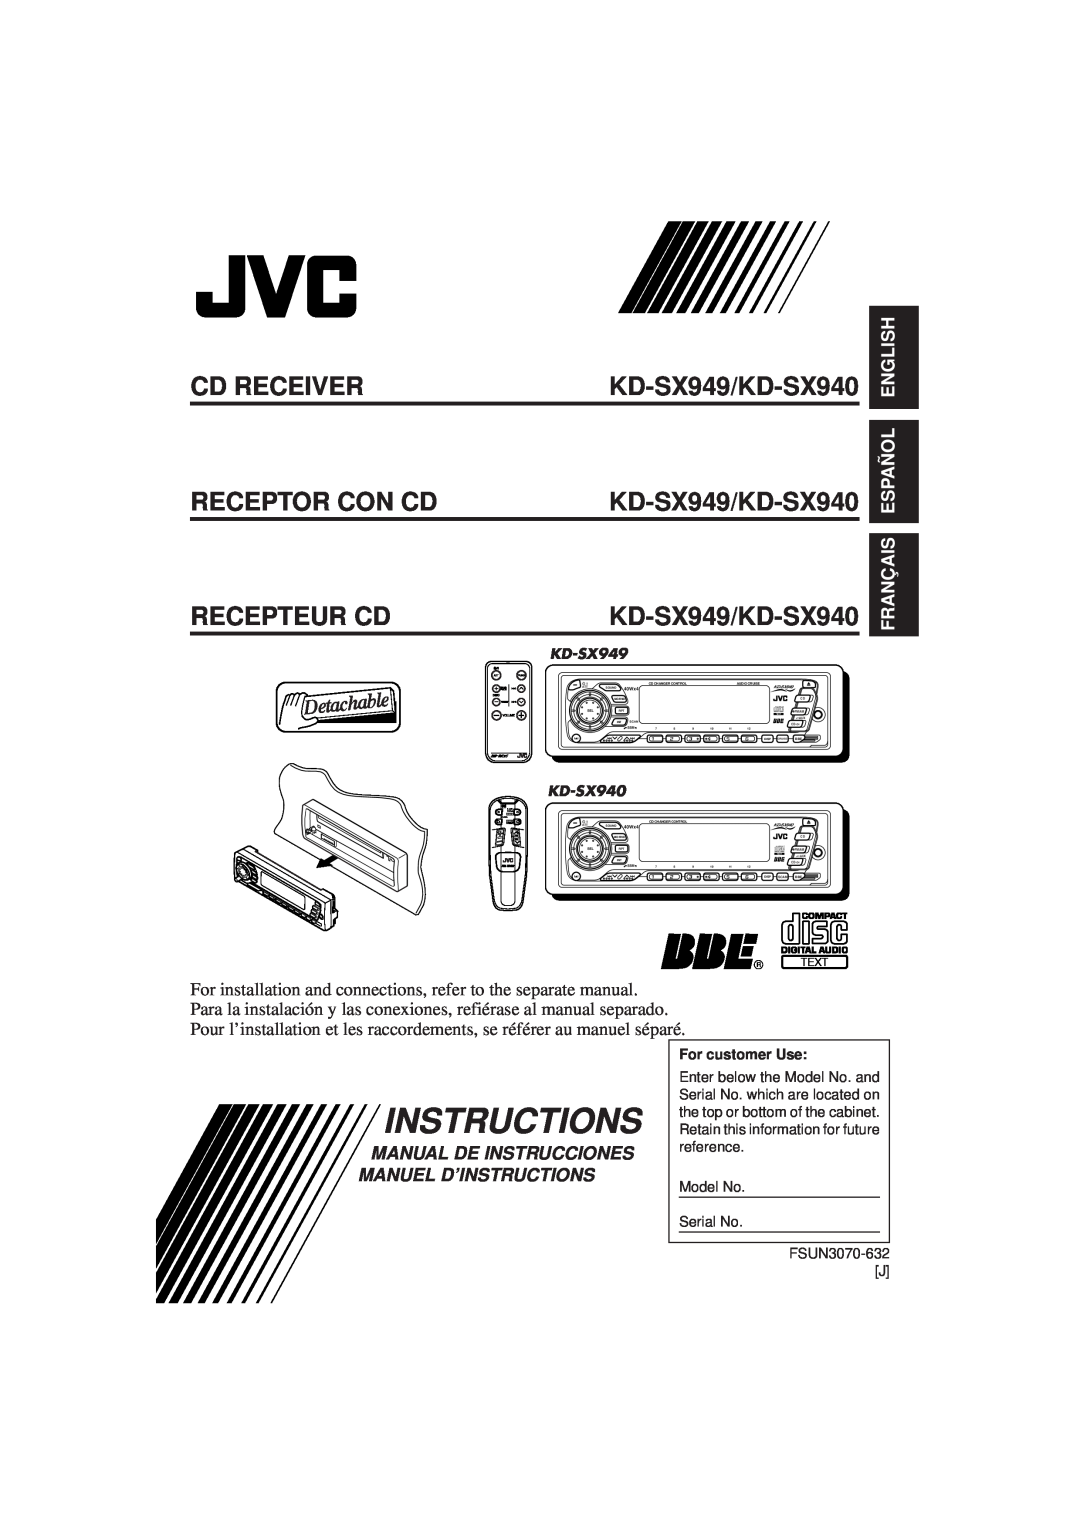 JVC manual Instructions, Cd Receiver, Receptor Con Cd, Recepteur Cd, KD-SX949/KD-SX940, Français Español English, Disc 